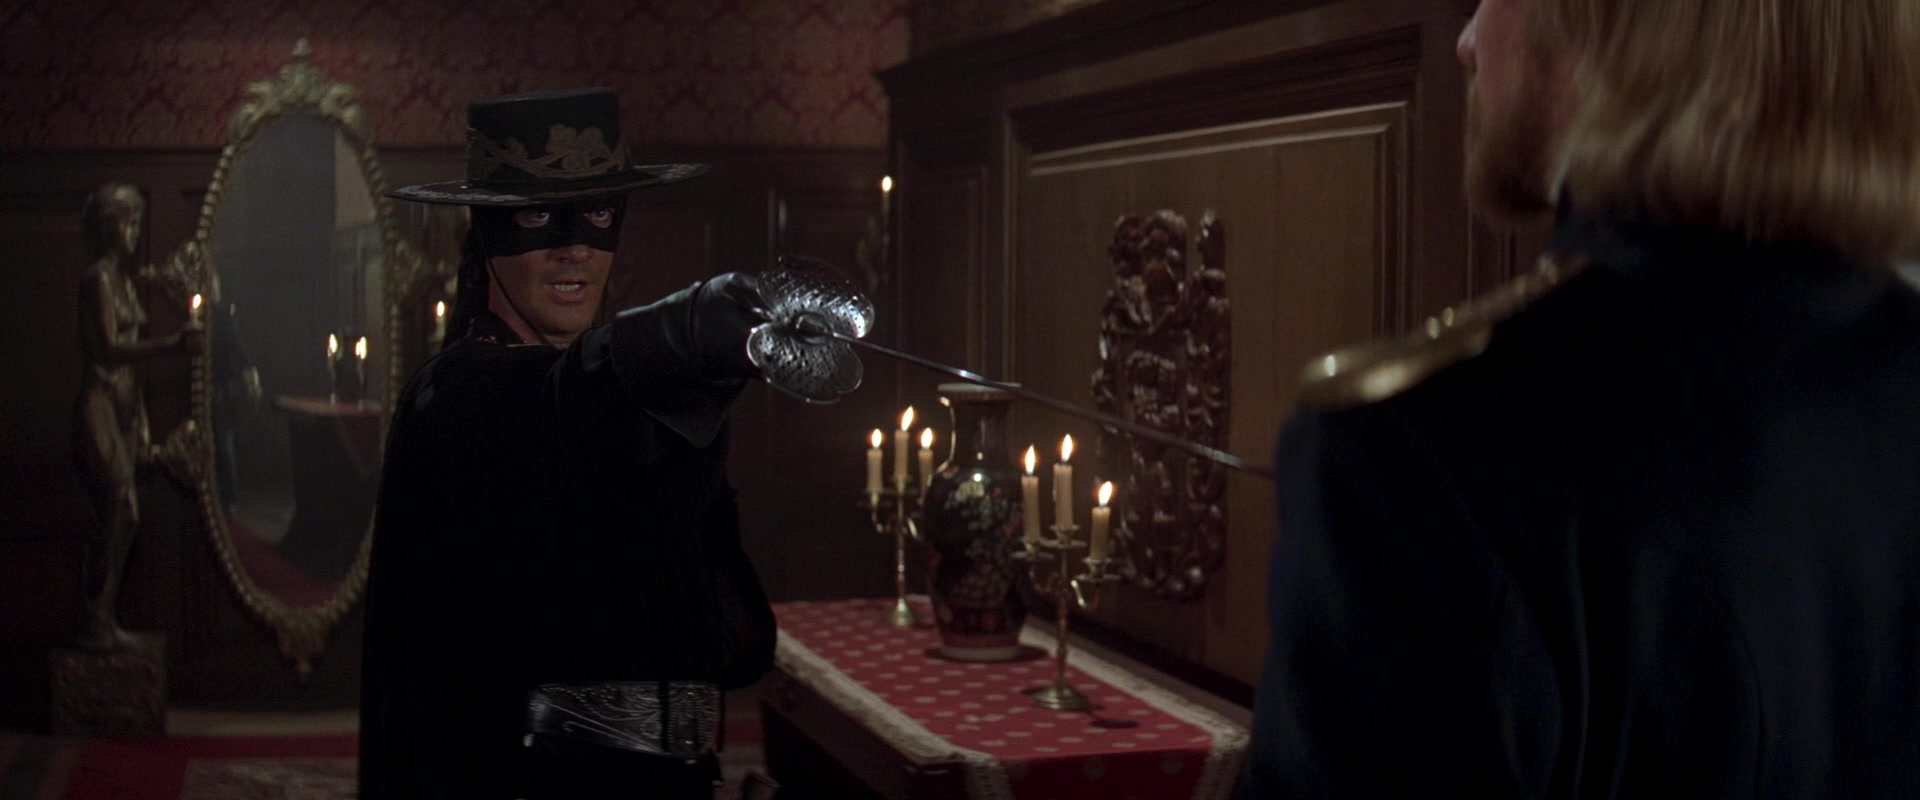 Zorro (Antonio Banderas) questions Don Rafael Montero (Stuart Wilson) at sword point in The Mask of Zorro (1998), Sony Pictures via Blu-ray